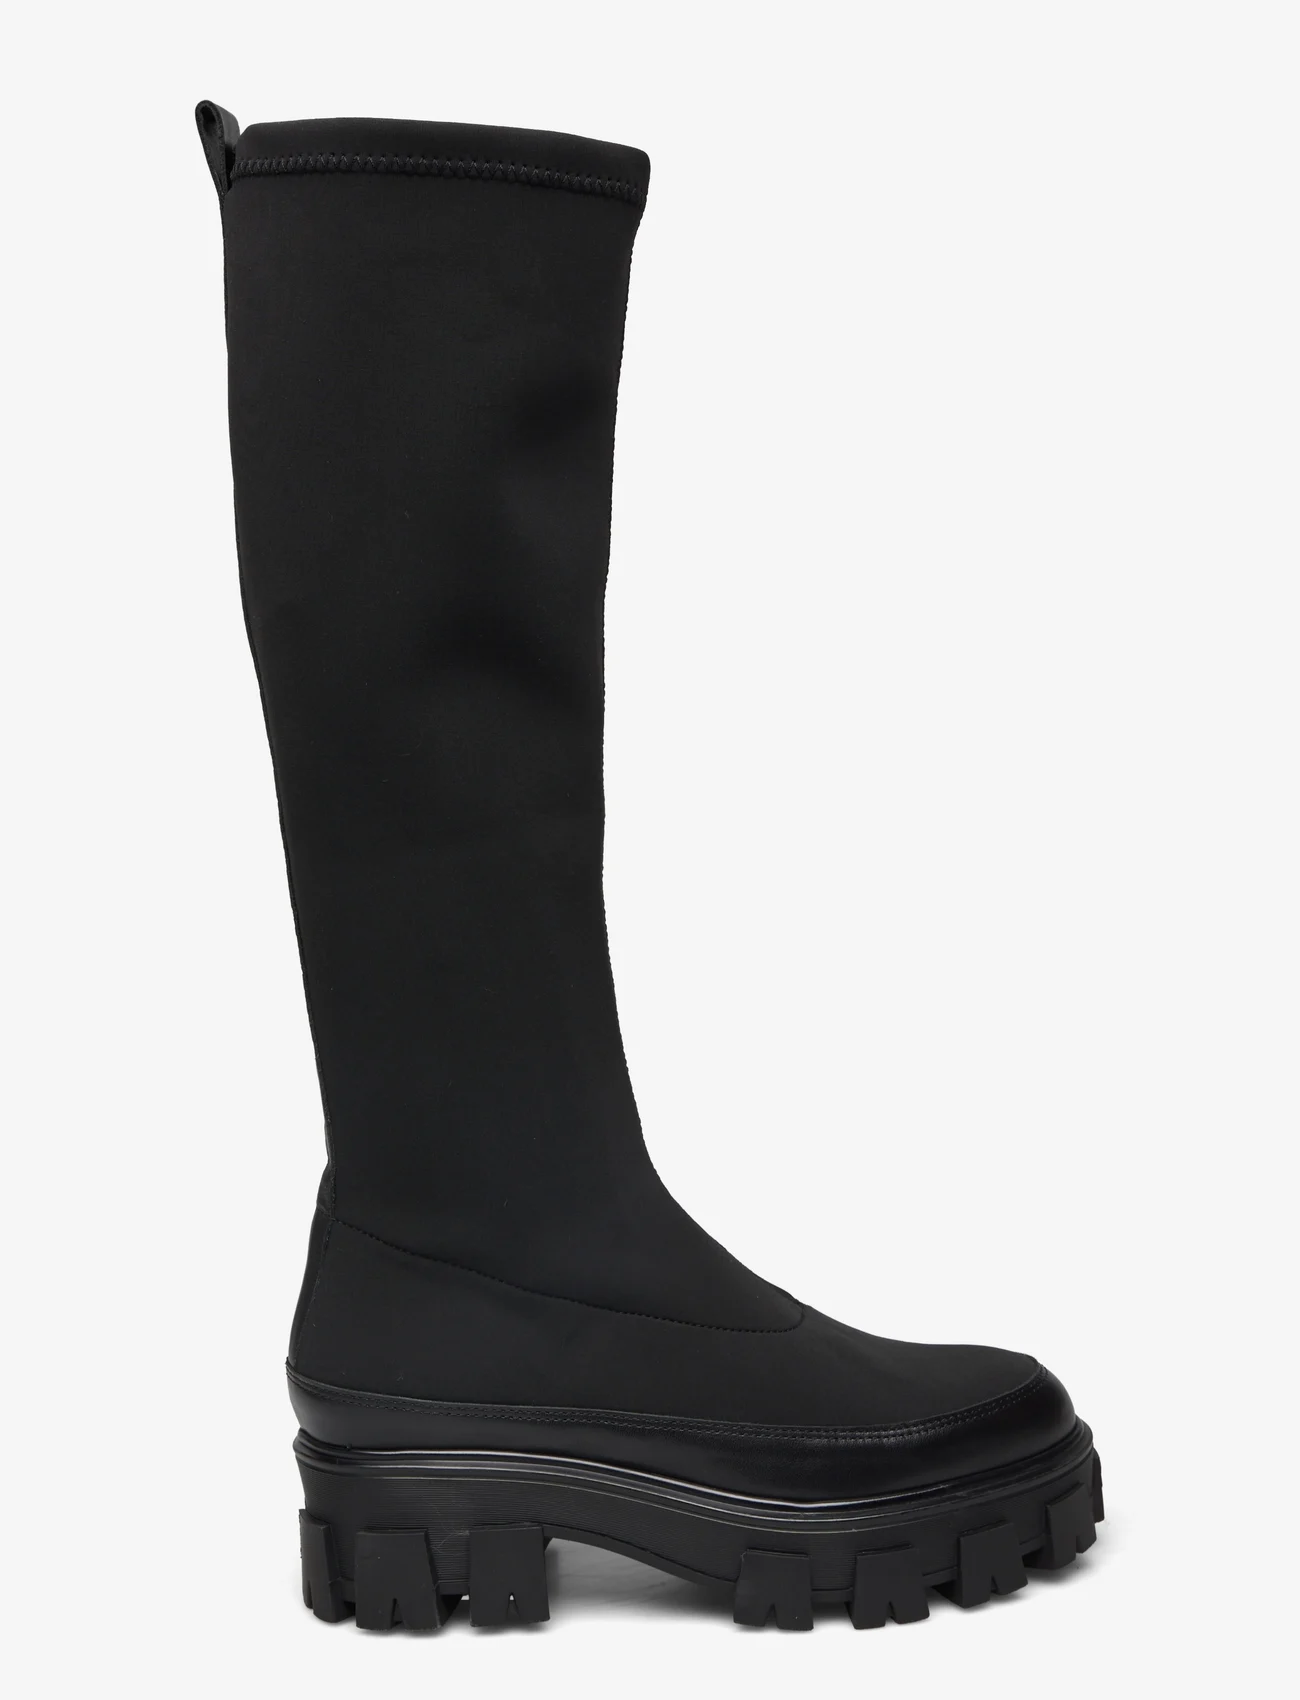 Billi Bi - Long Boots - kniehohe stiefel - black stretch - 1